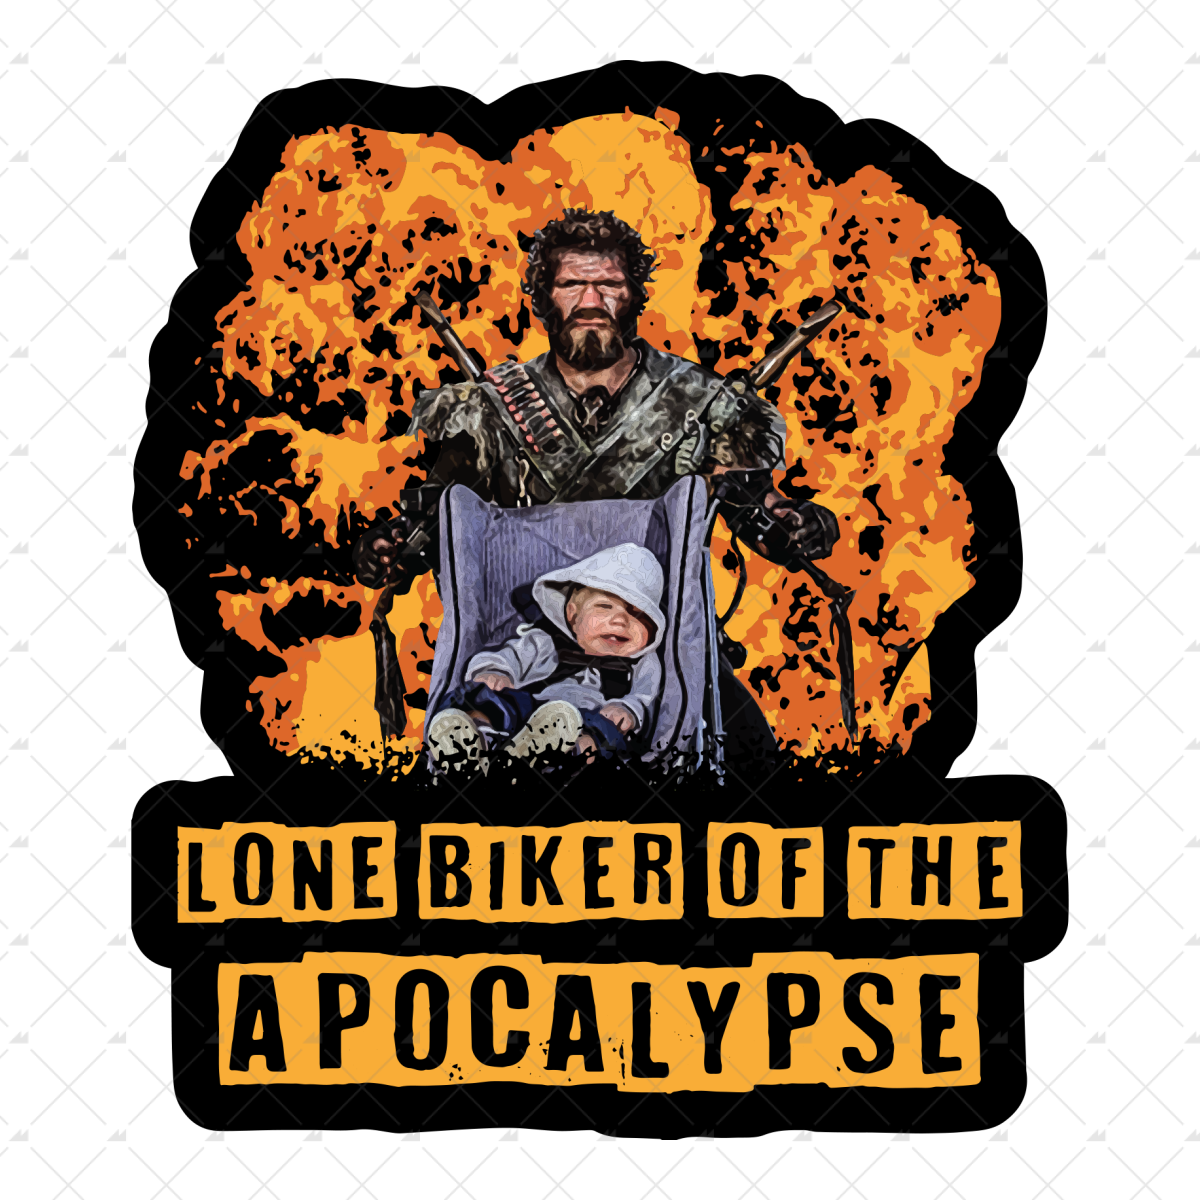 Lone Biker of the Apocalypse - Sticker